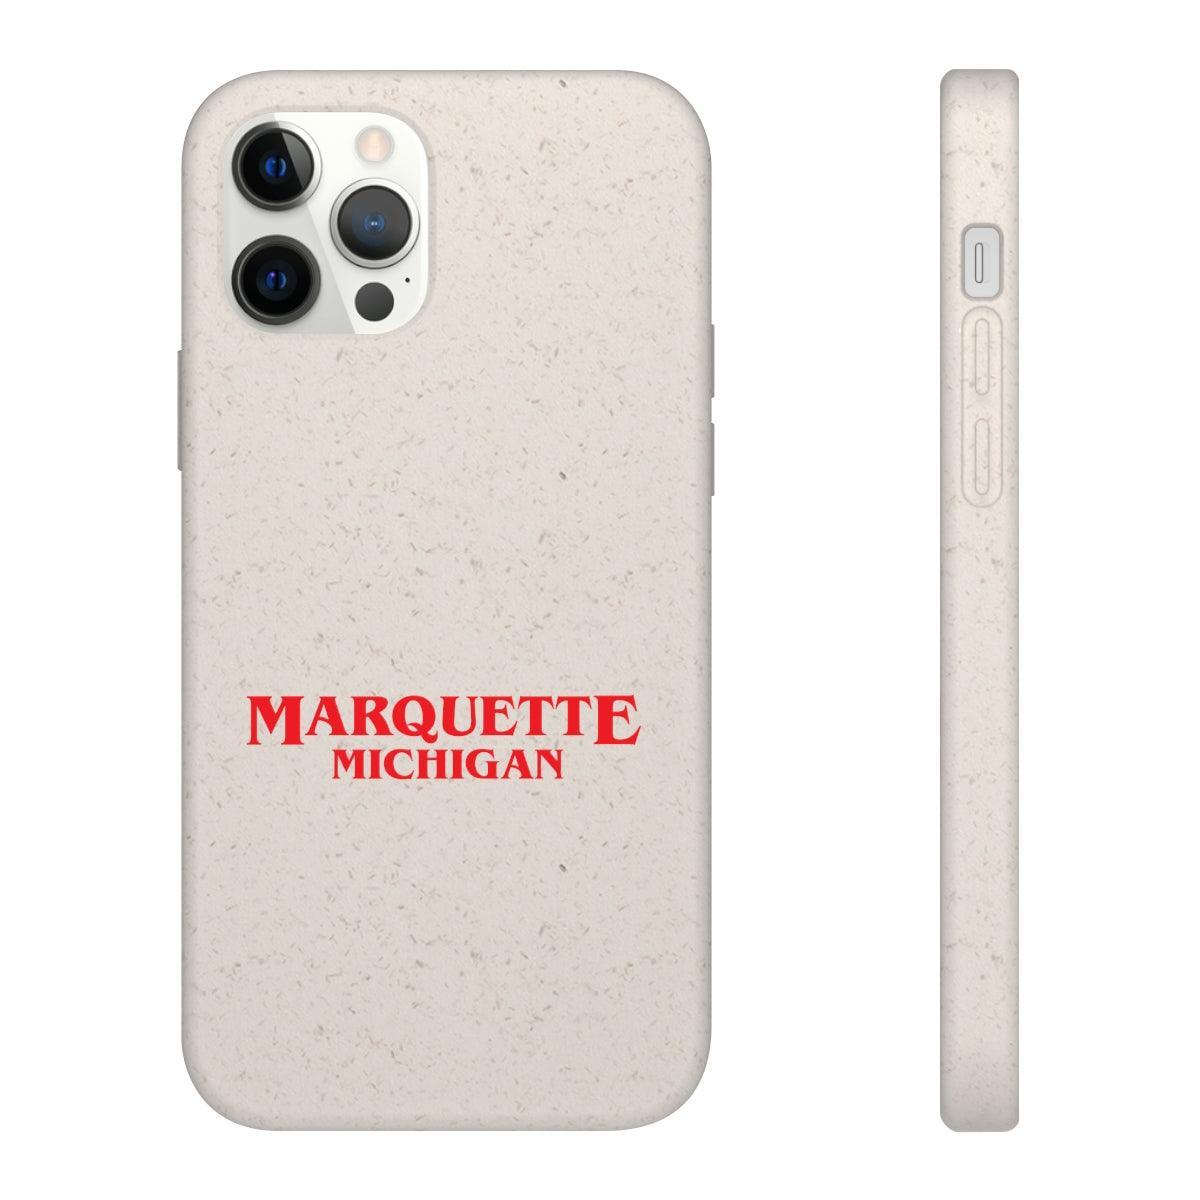 'Marquette Michigan' Phone Cases (1980s Drama Parody) | Android & iPhone - Circumspice Michigan